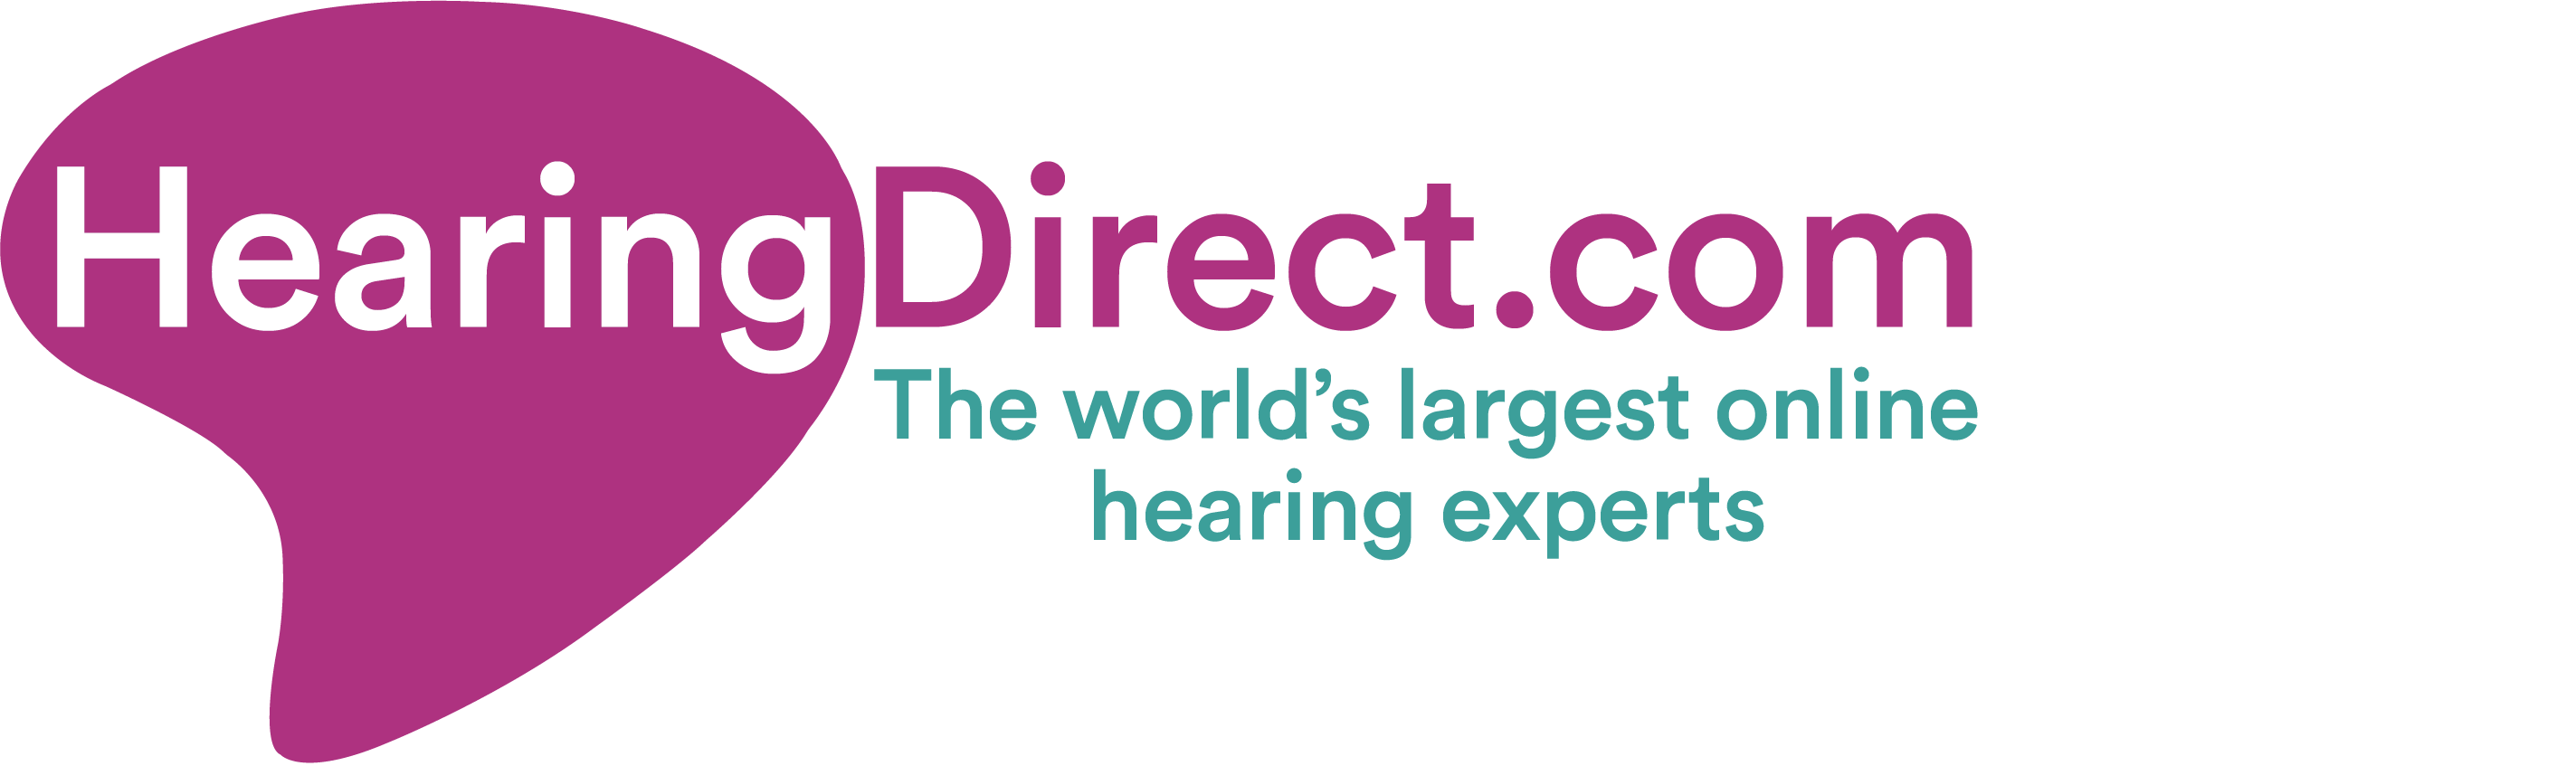 Free 1:1 audio consultation at Hearing Direct UK